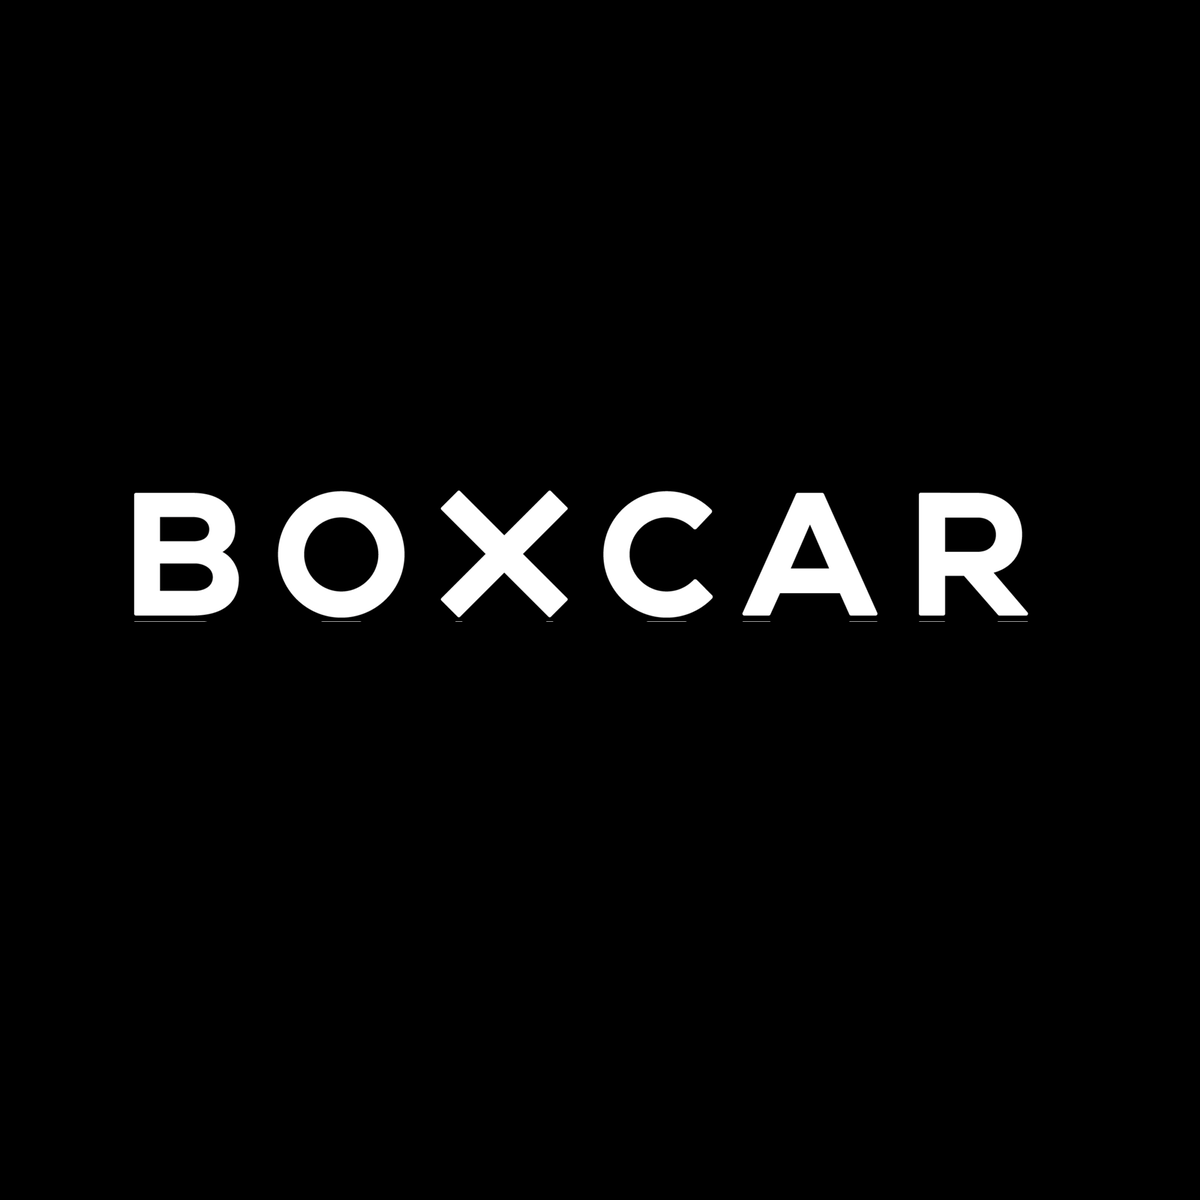 BOXCAR Brewery brand logo